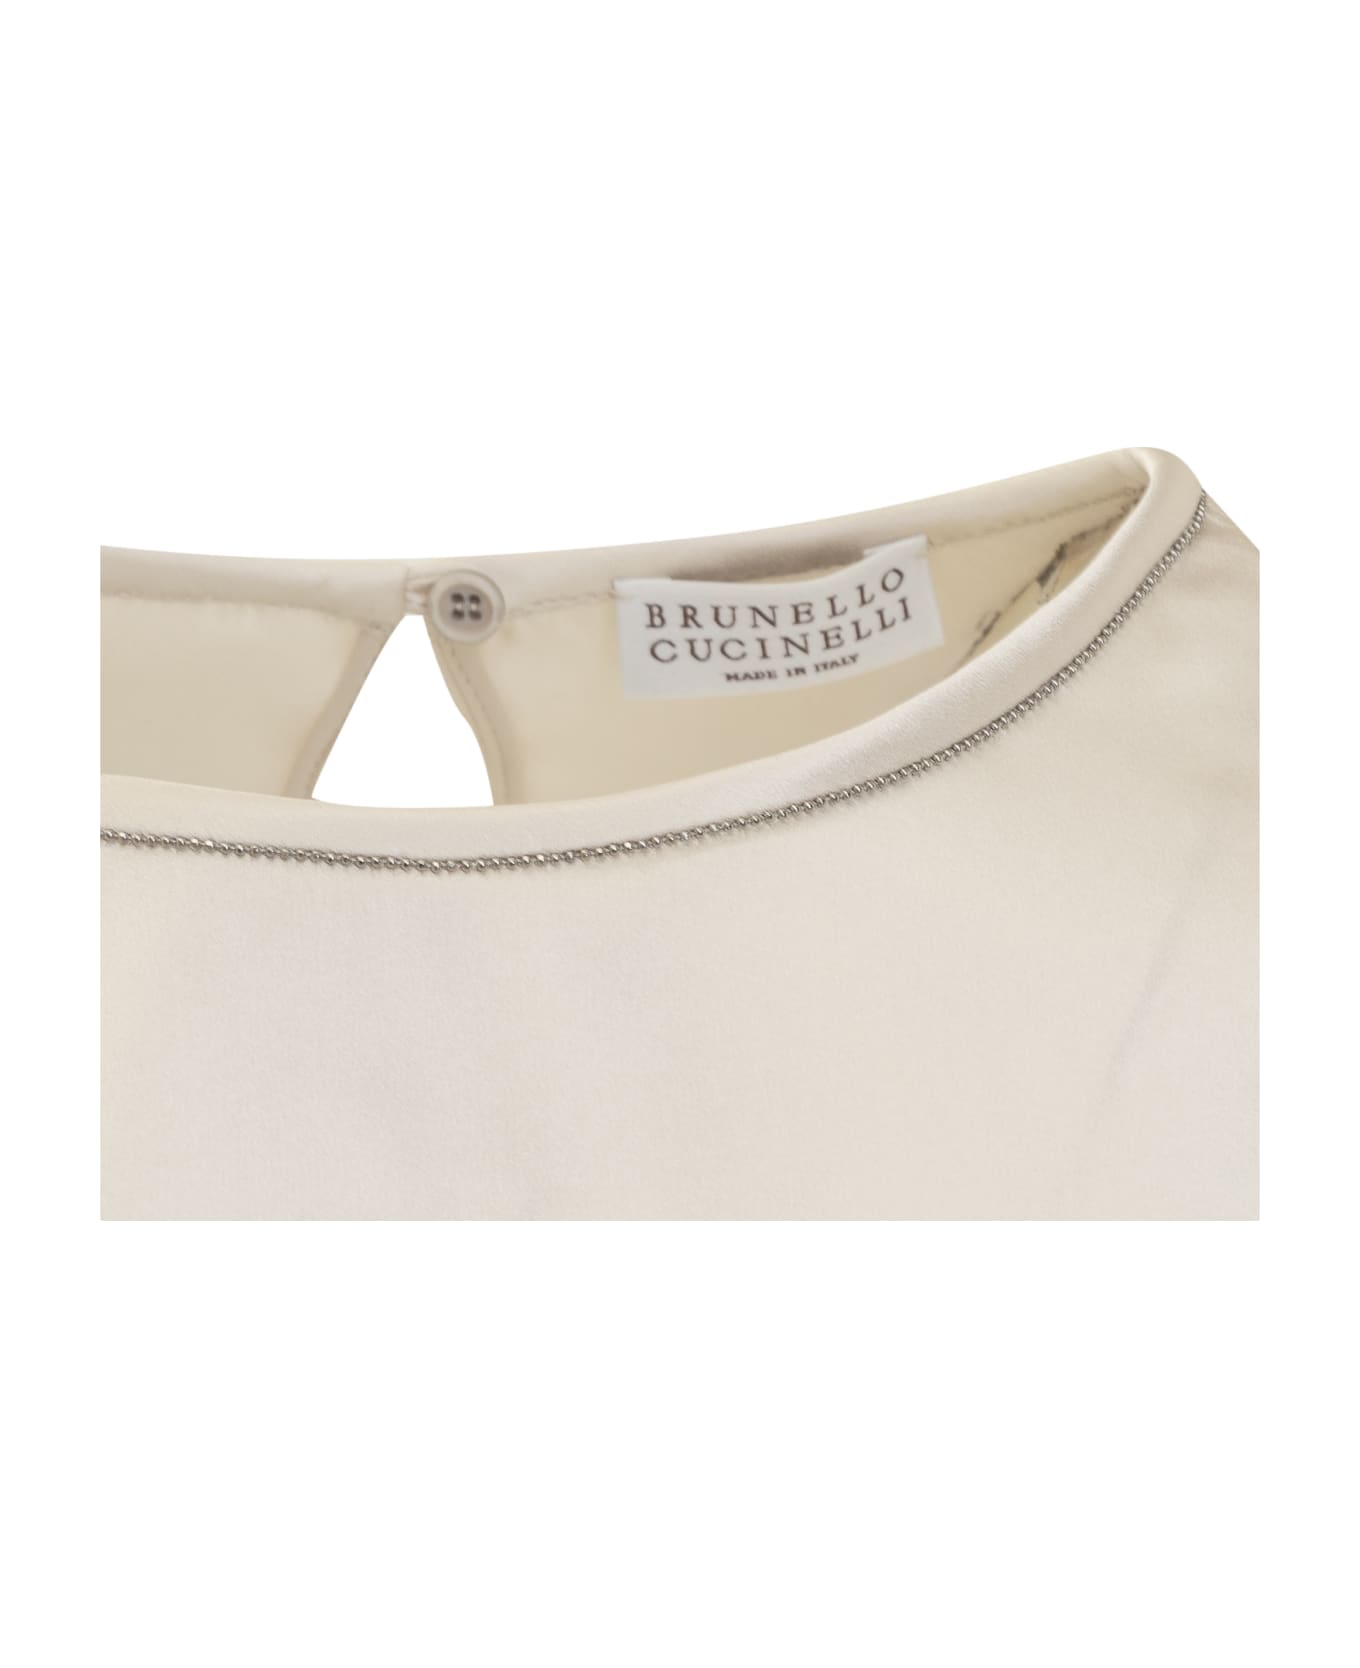 Brunello Cucinelli Monile T-shirt - WARM WHITE